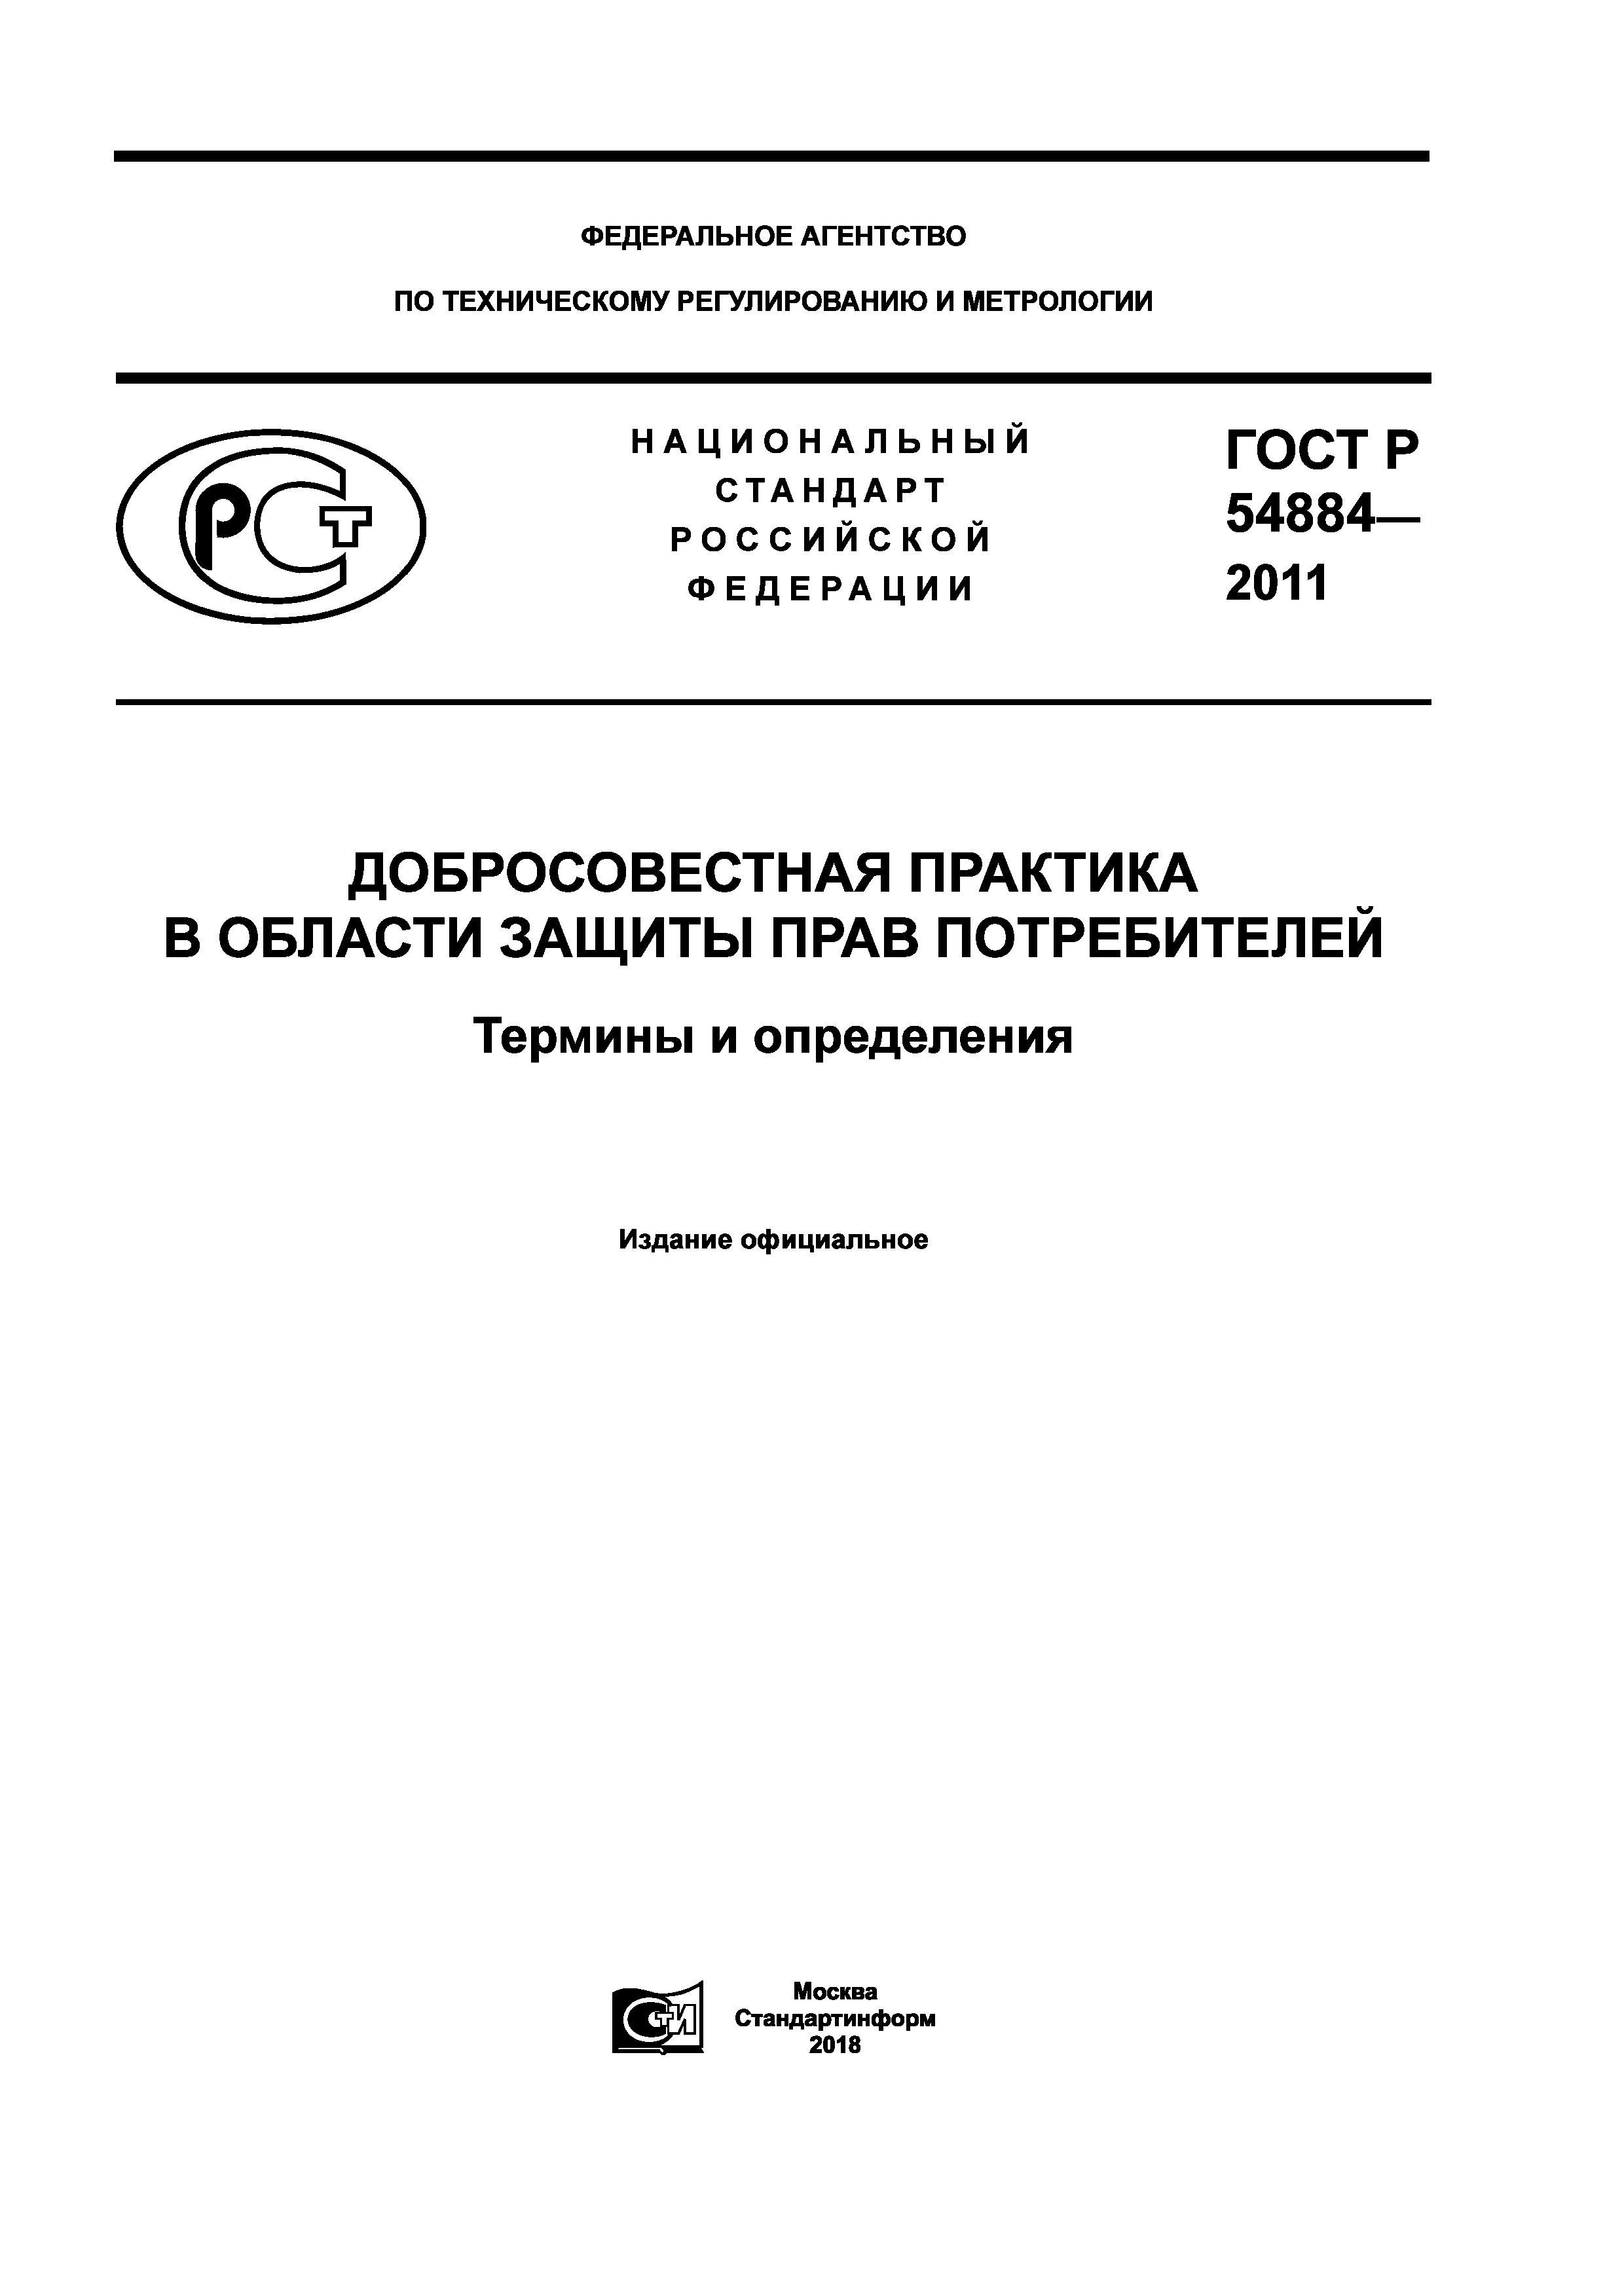 ГОСТ Р 54884-2011